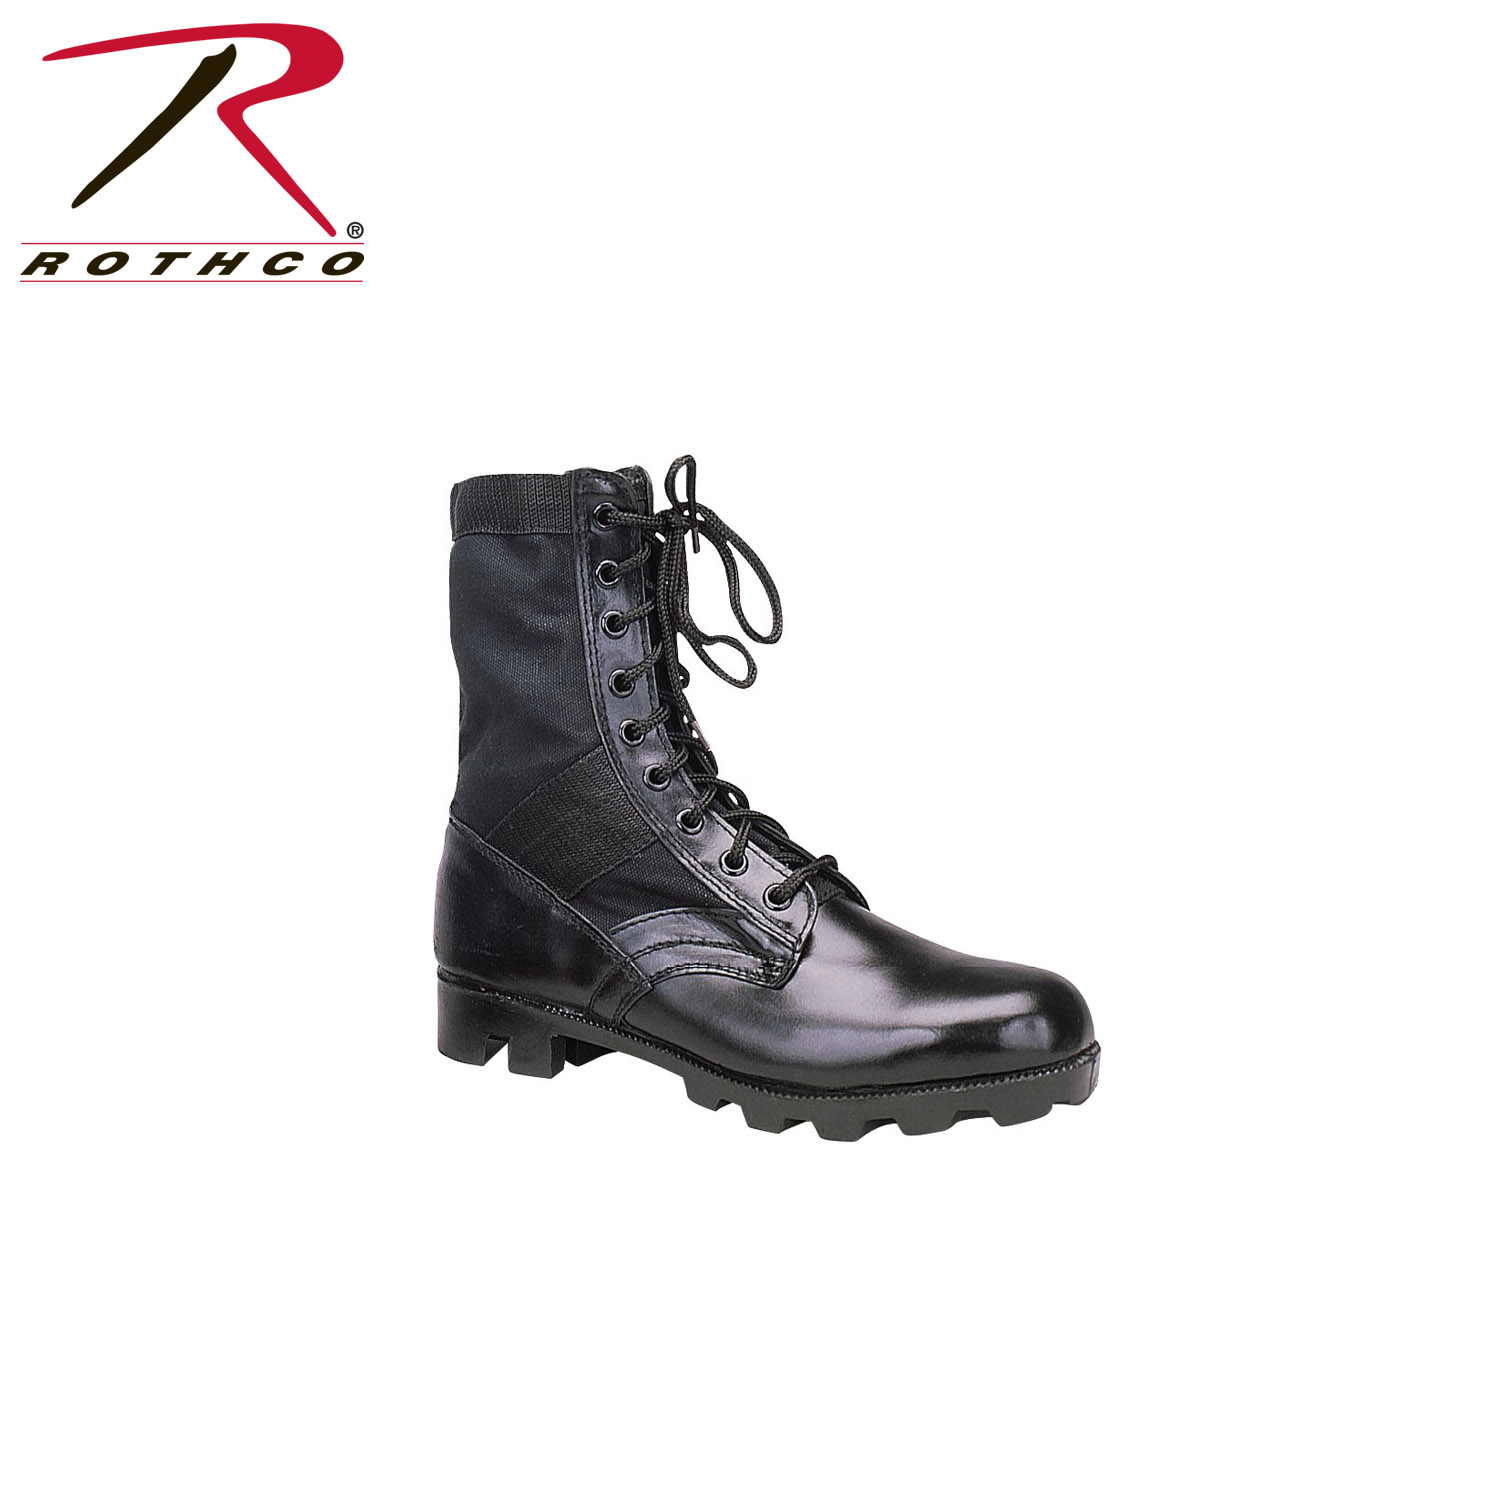 Rothco 5781 G.I. Type Black Steel Toe 